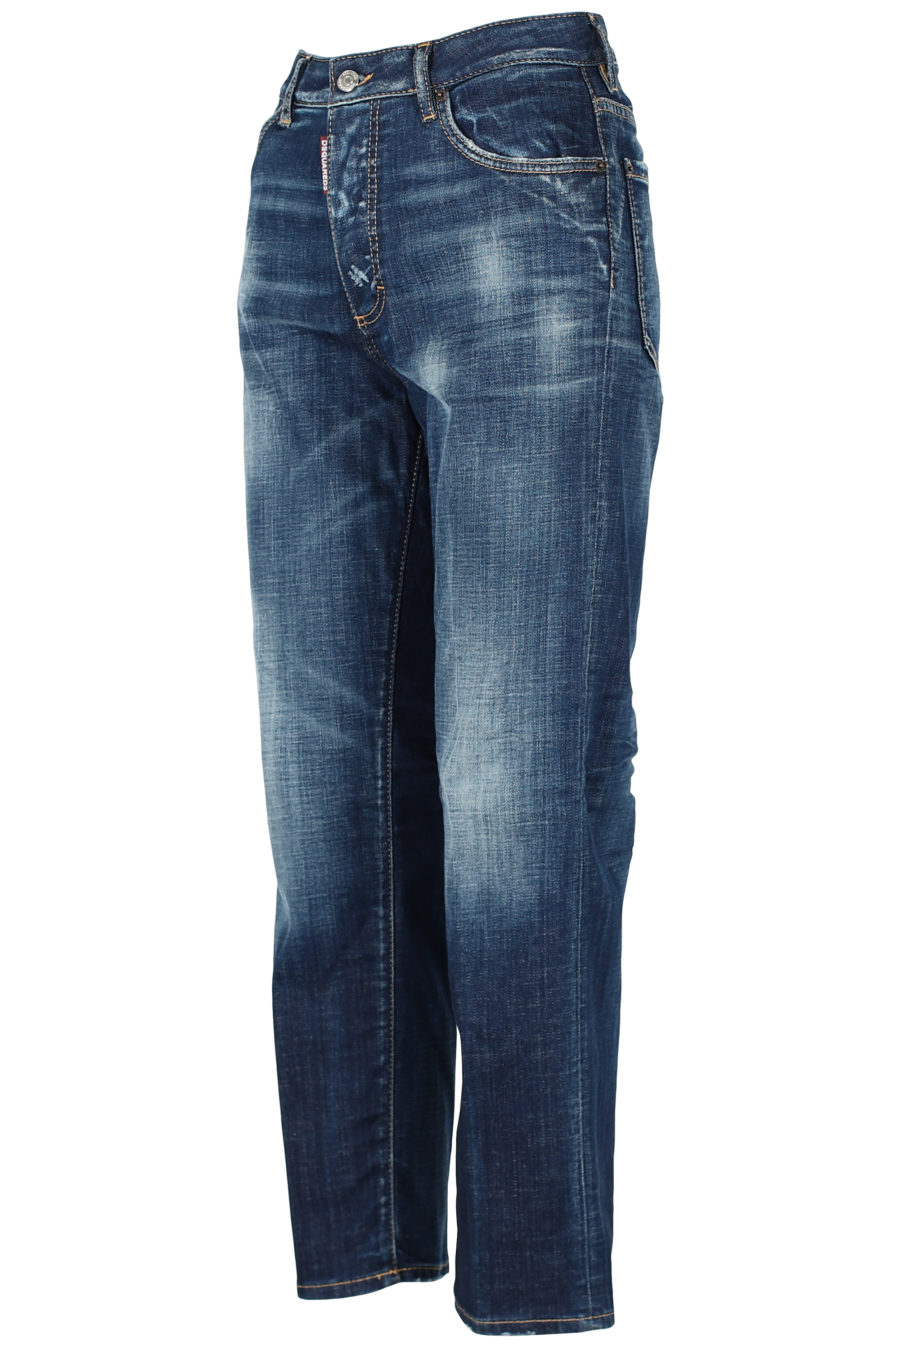 Pantalón tejano azul oscuro "Boston jean" - IMG 3225